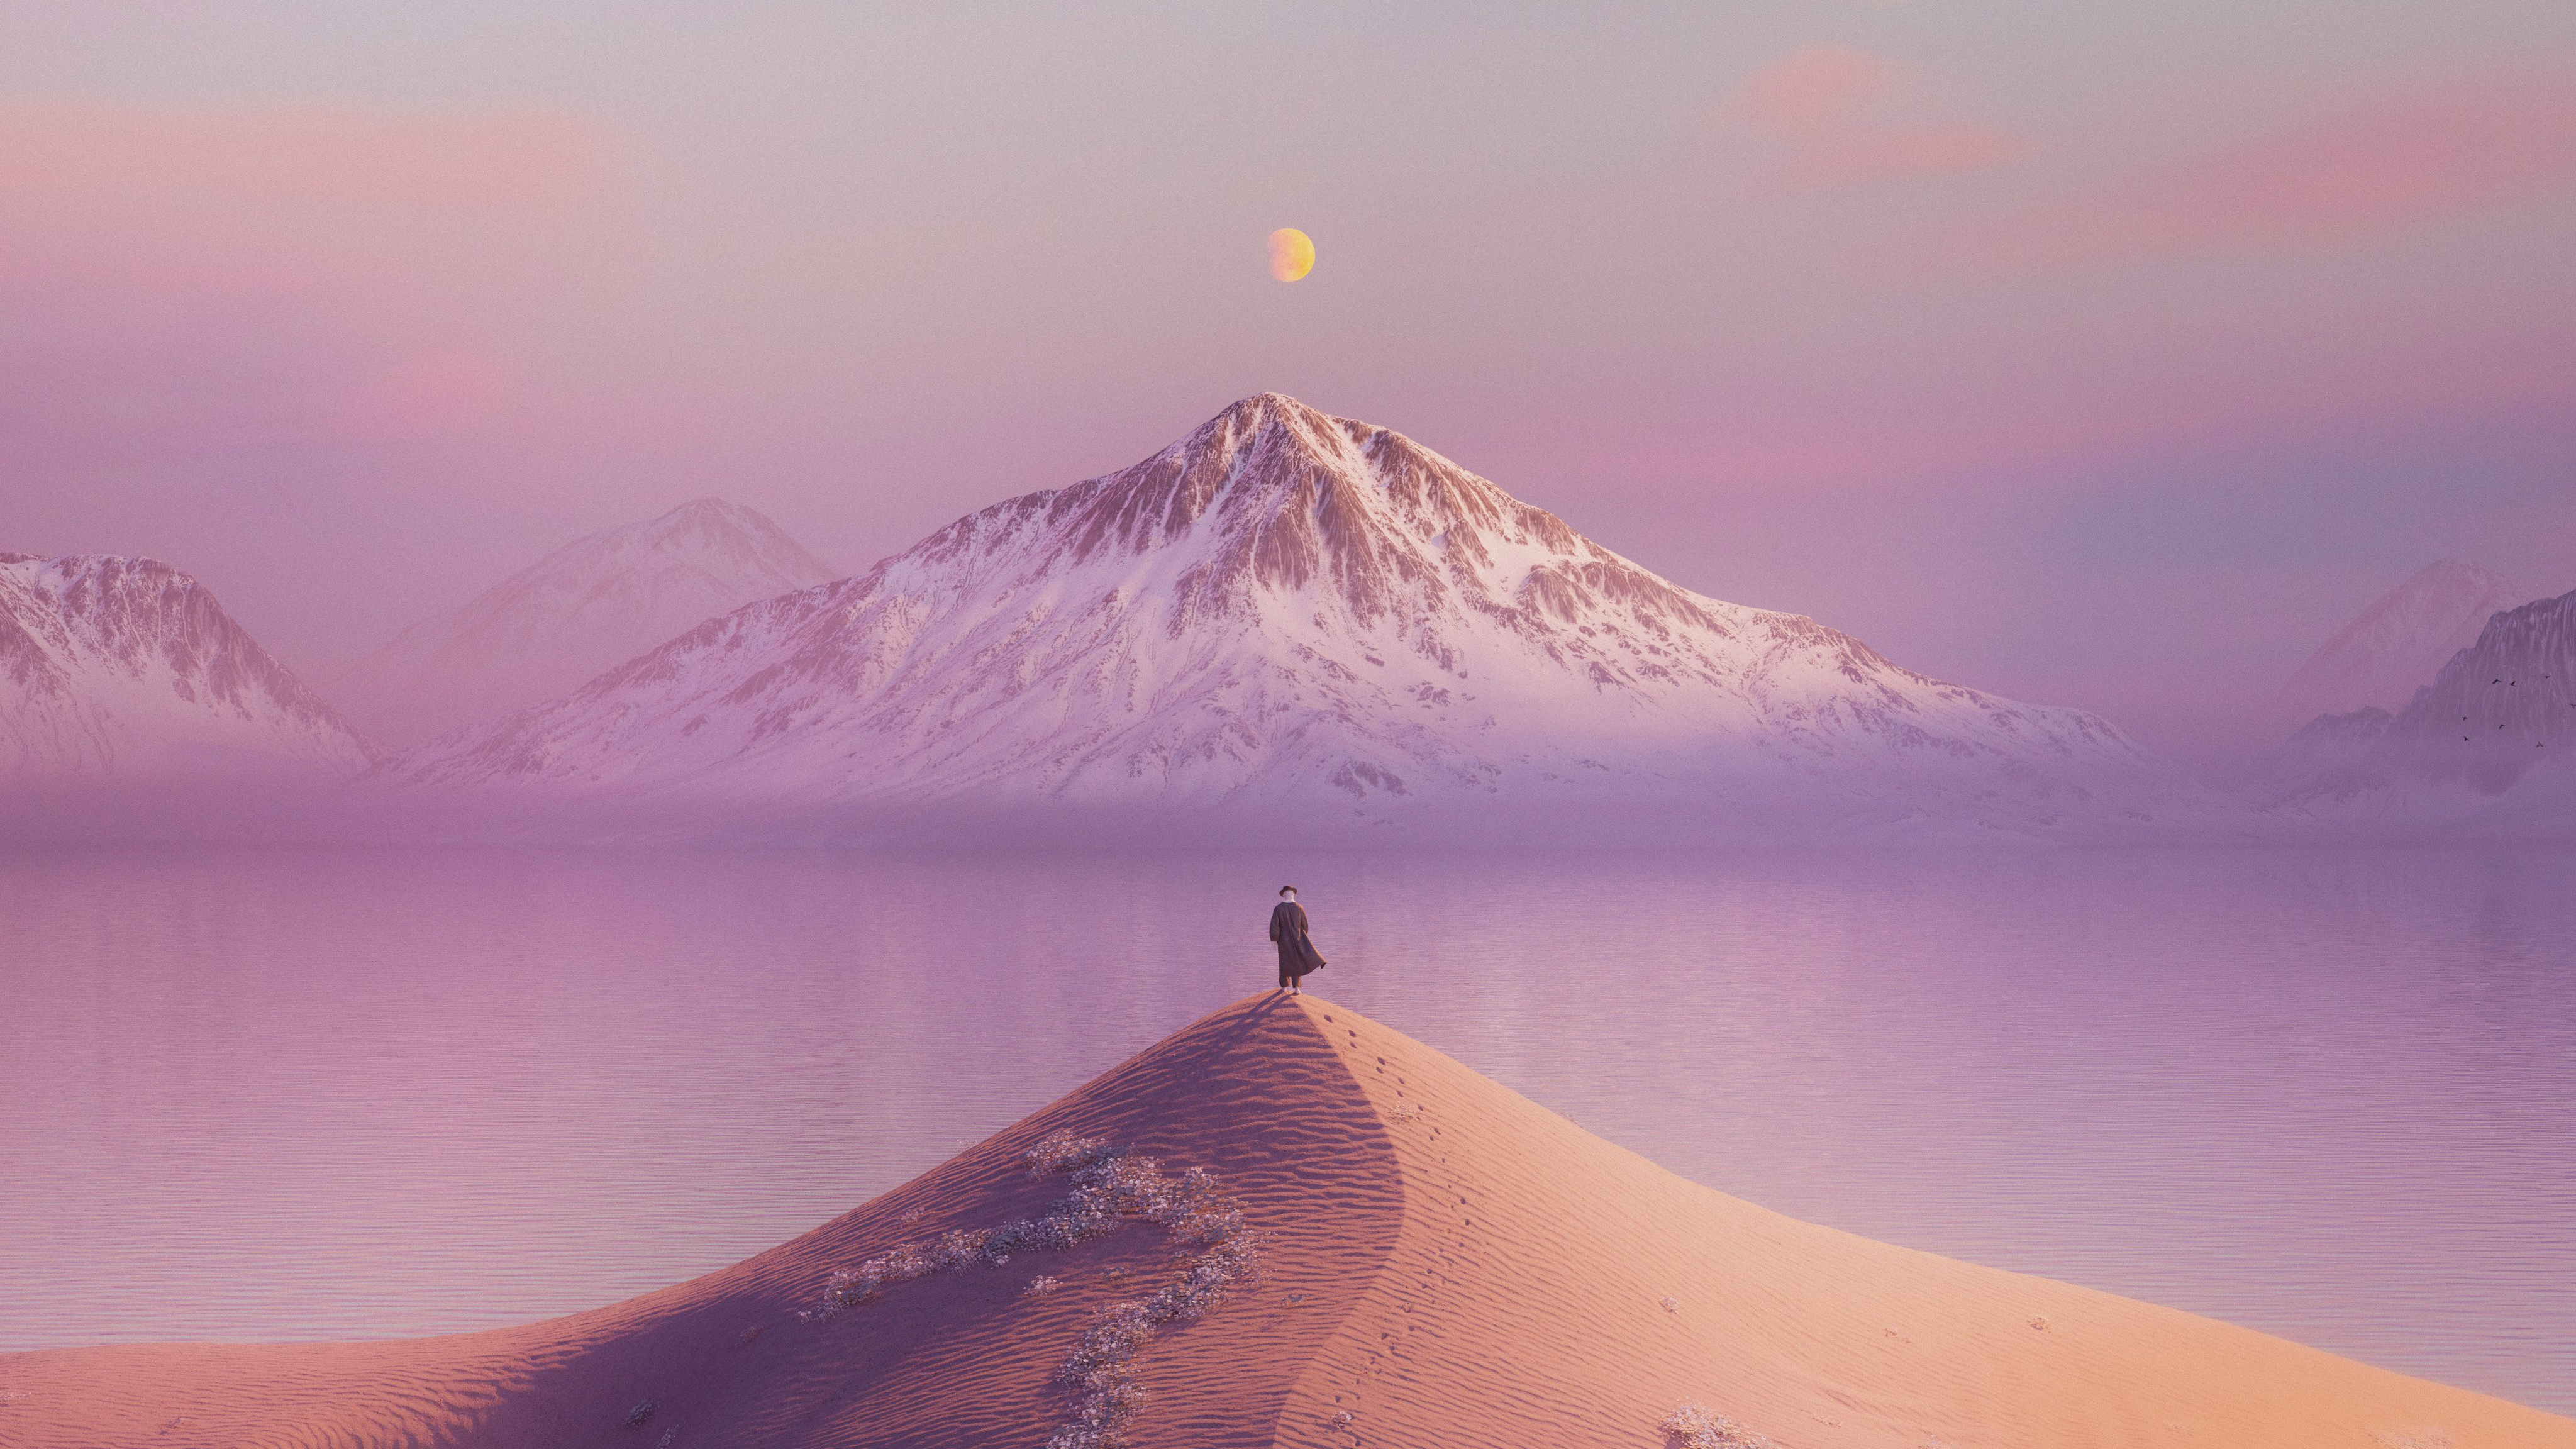 Digital Art Artwork Illustration Landscape Sea Water Mountains Desert Dunes Snow Moon 4096x2304